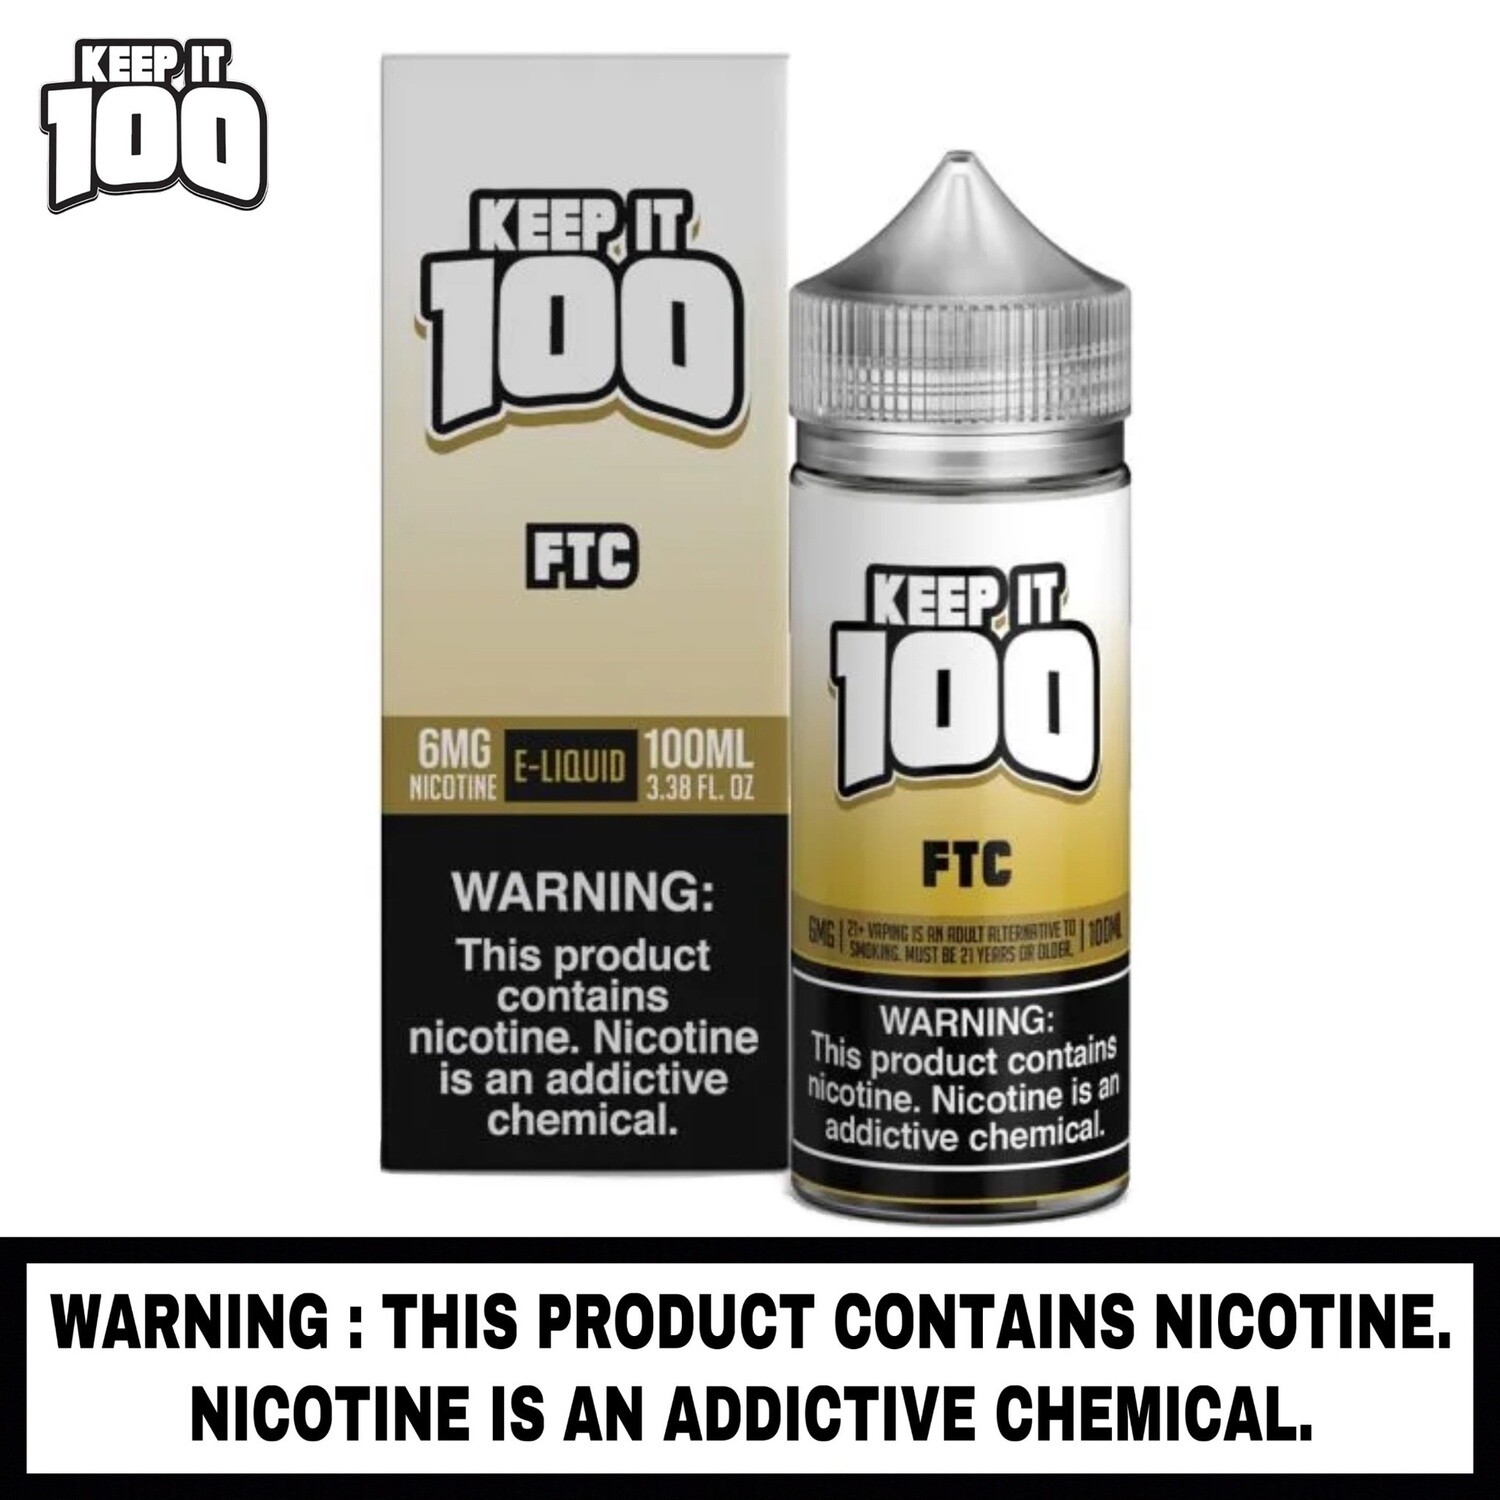 Keep It 100™ E-liquid